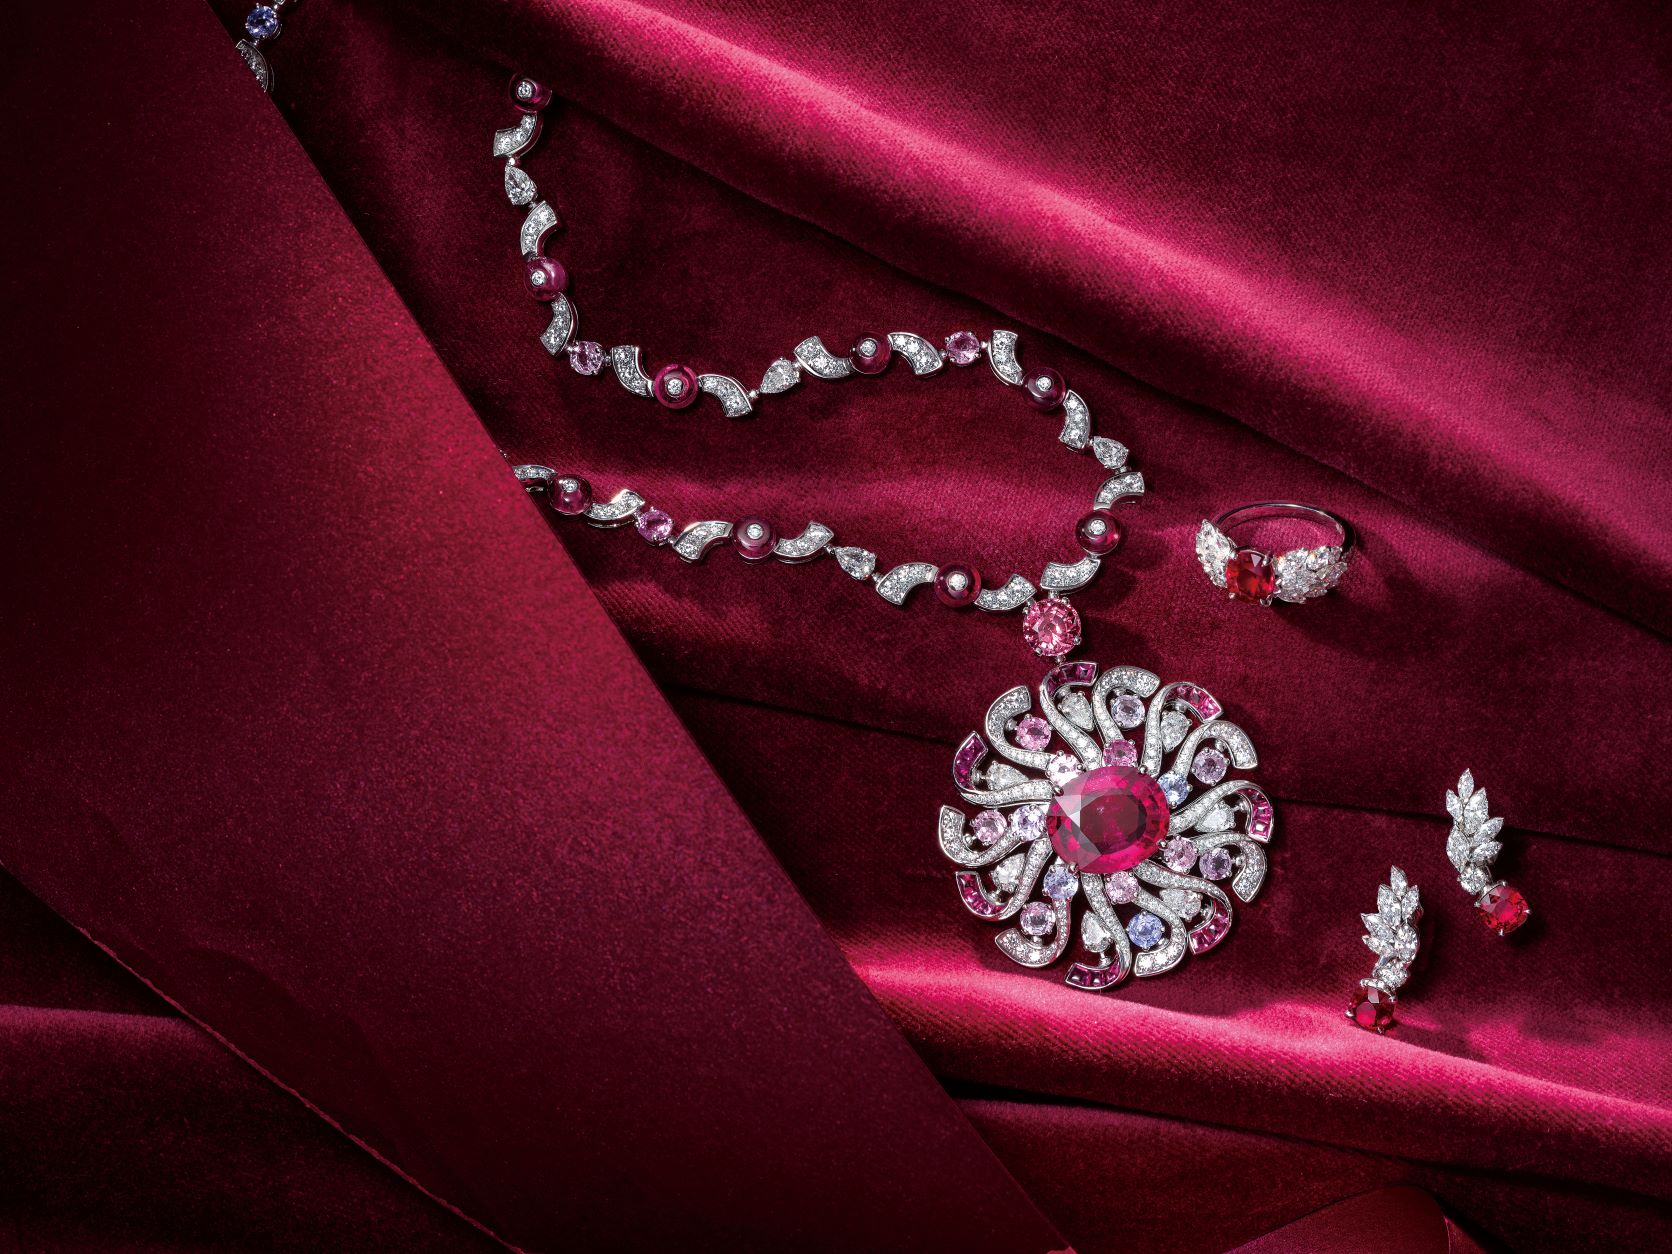 Bulgari MAGNIFICA 系列顶级红碧玺、尖晶石与钻石项链。 Piaget Treasures 系列红宝石高级珠宝钻石耳环。 Piaget Treasures 系列红宝石高级珠宝钻石戒指。